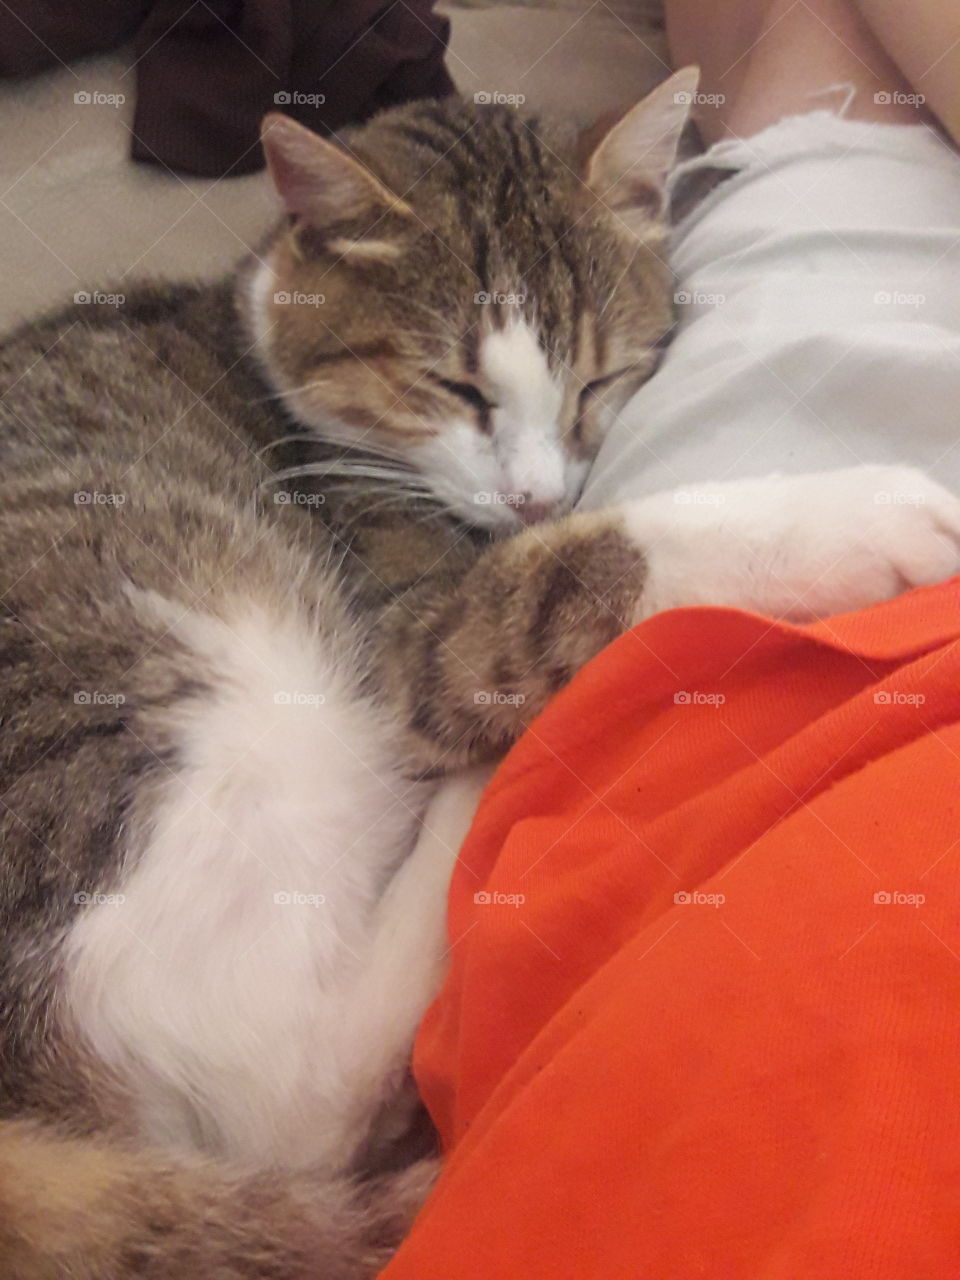 my sweet lady cat hugs and sleep